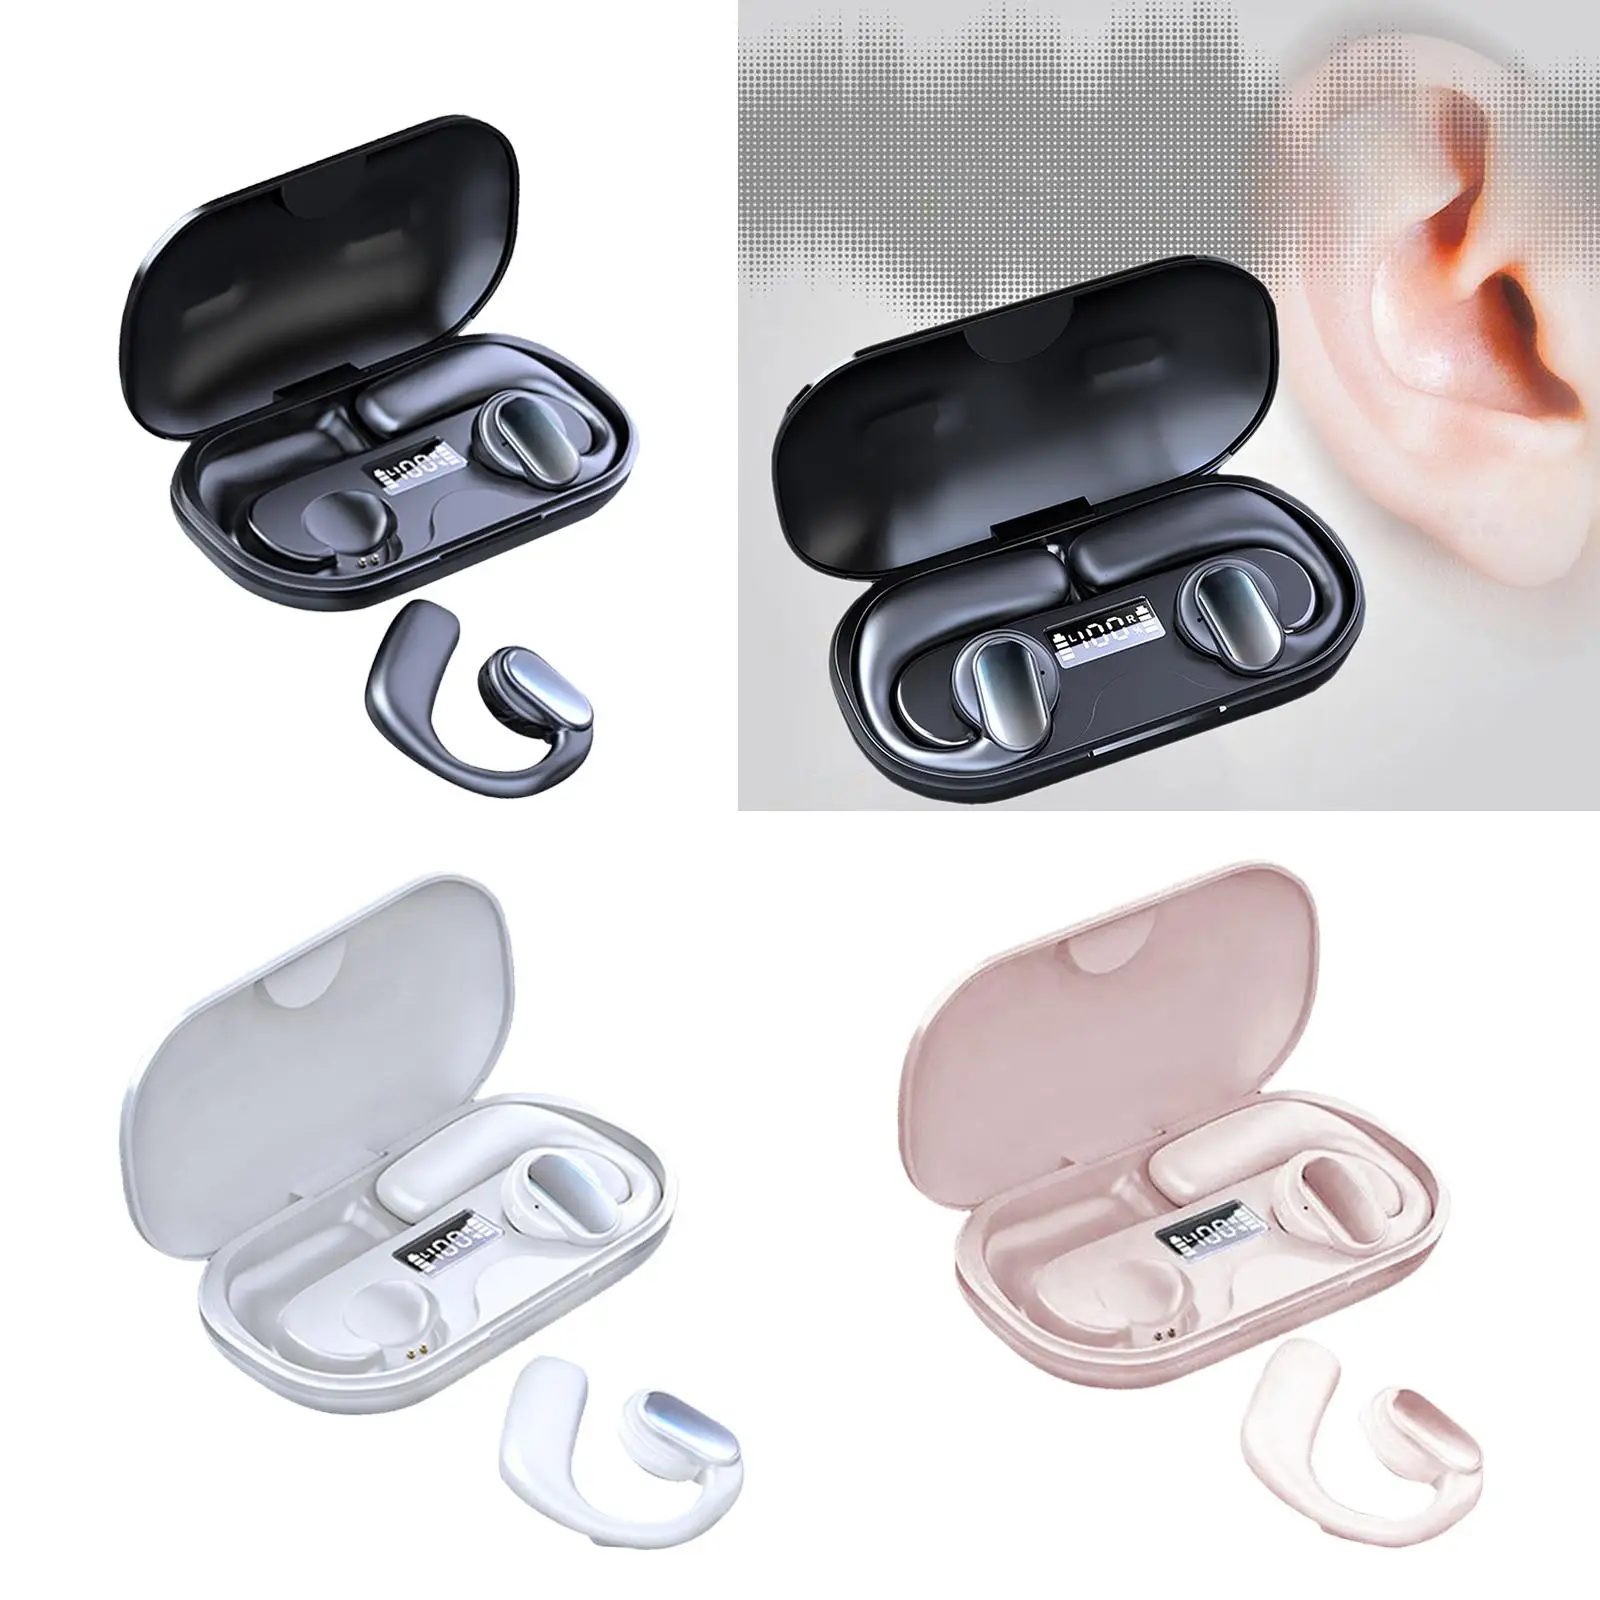 V5.3 Headphones Ear Hooks Ergonomic with Charging Case Headsets Earphones for Sports Laptop Workout Gym Running All Smart Phones